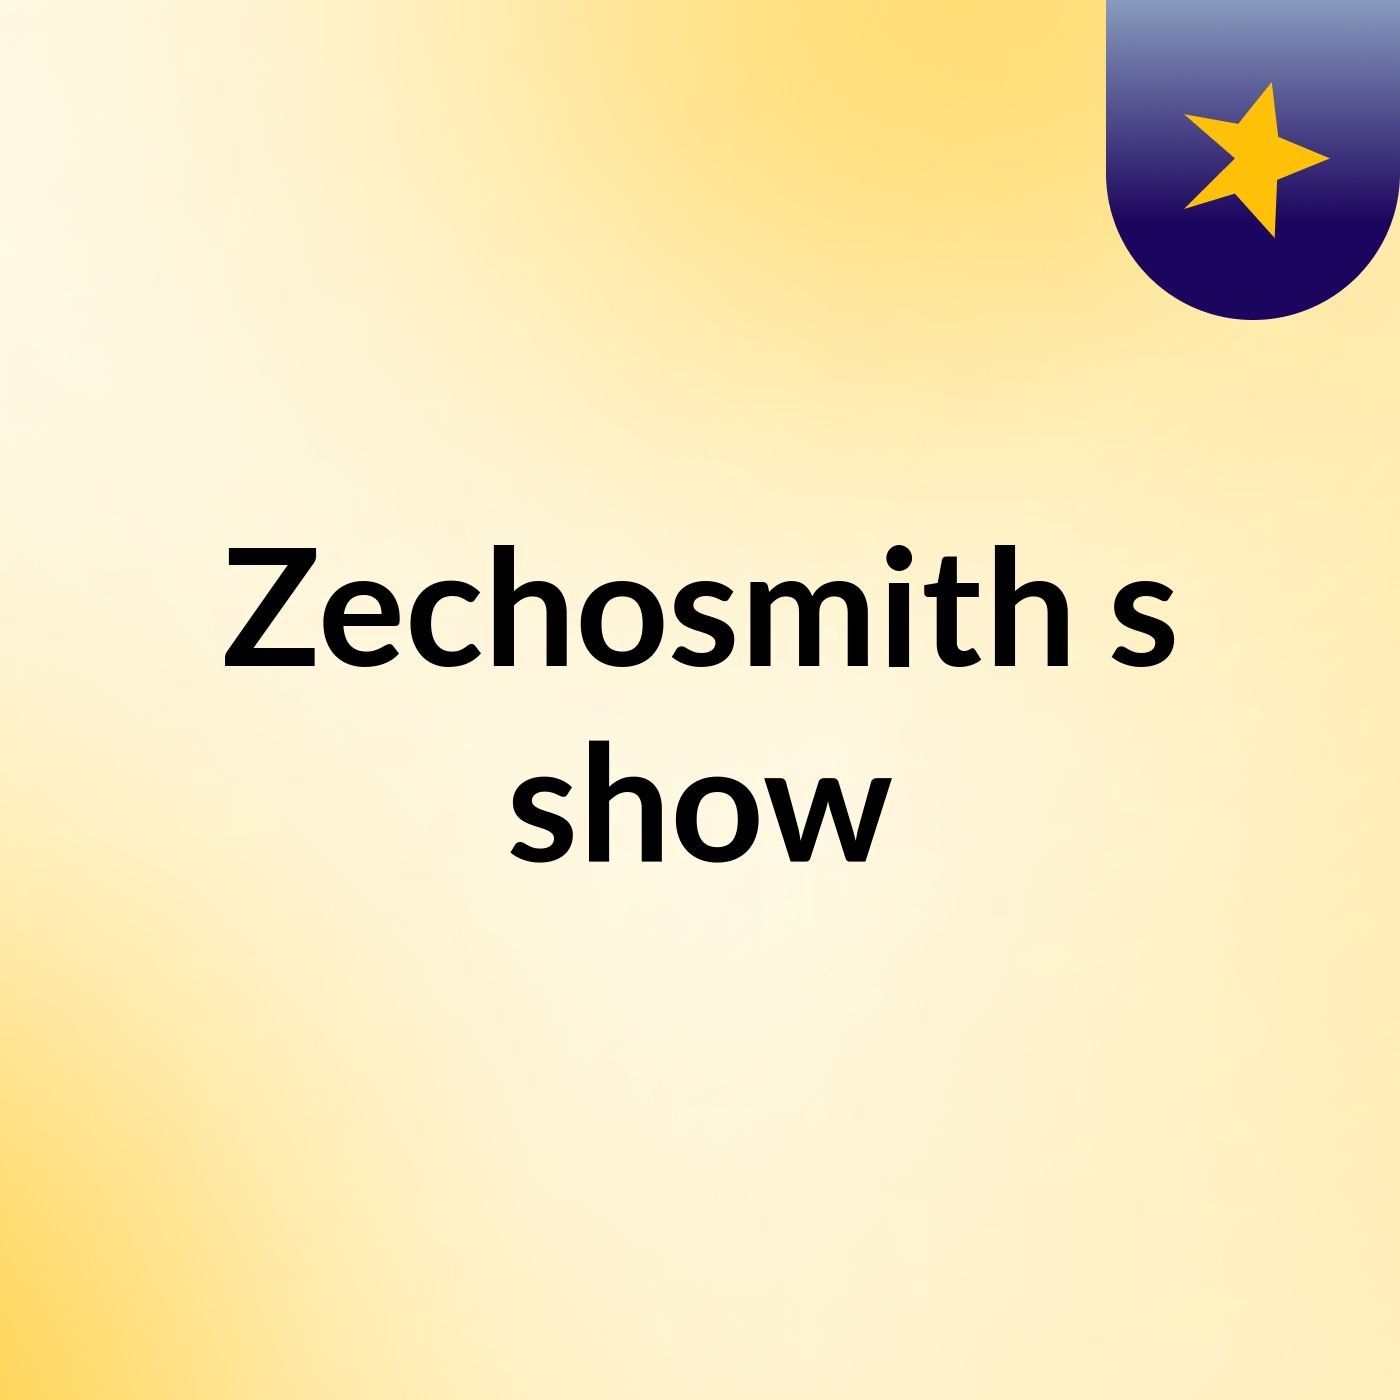 Zechosmith's show